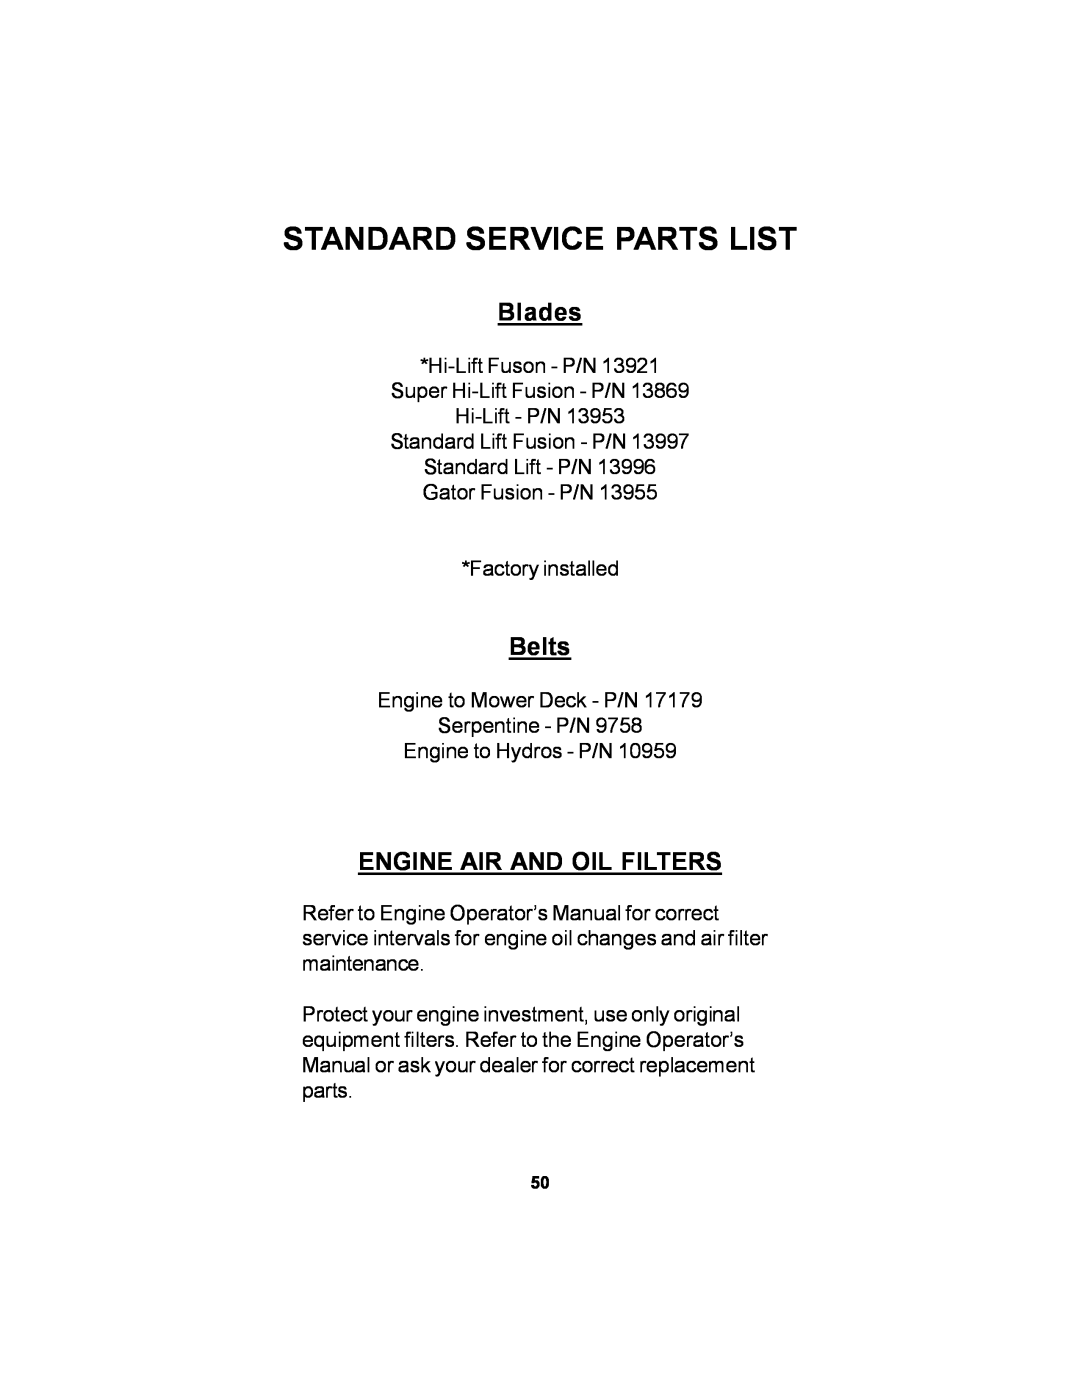 Dixon ELS 60 manual Standard Service Parts List, Blades, Belts, Engine Air And Oil Filters 